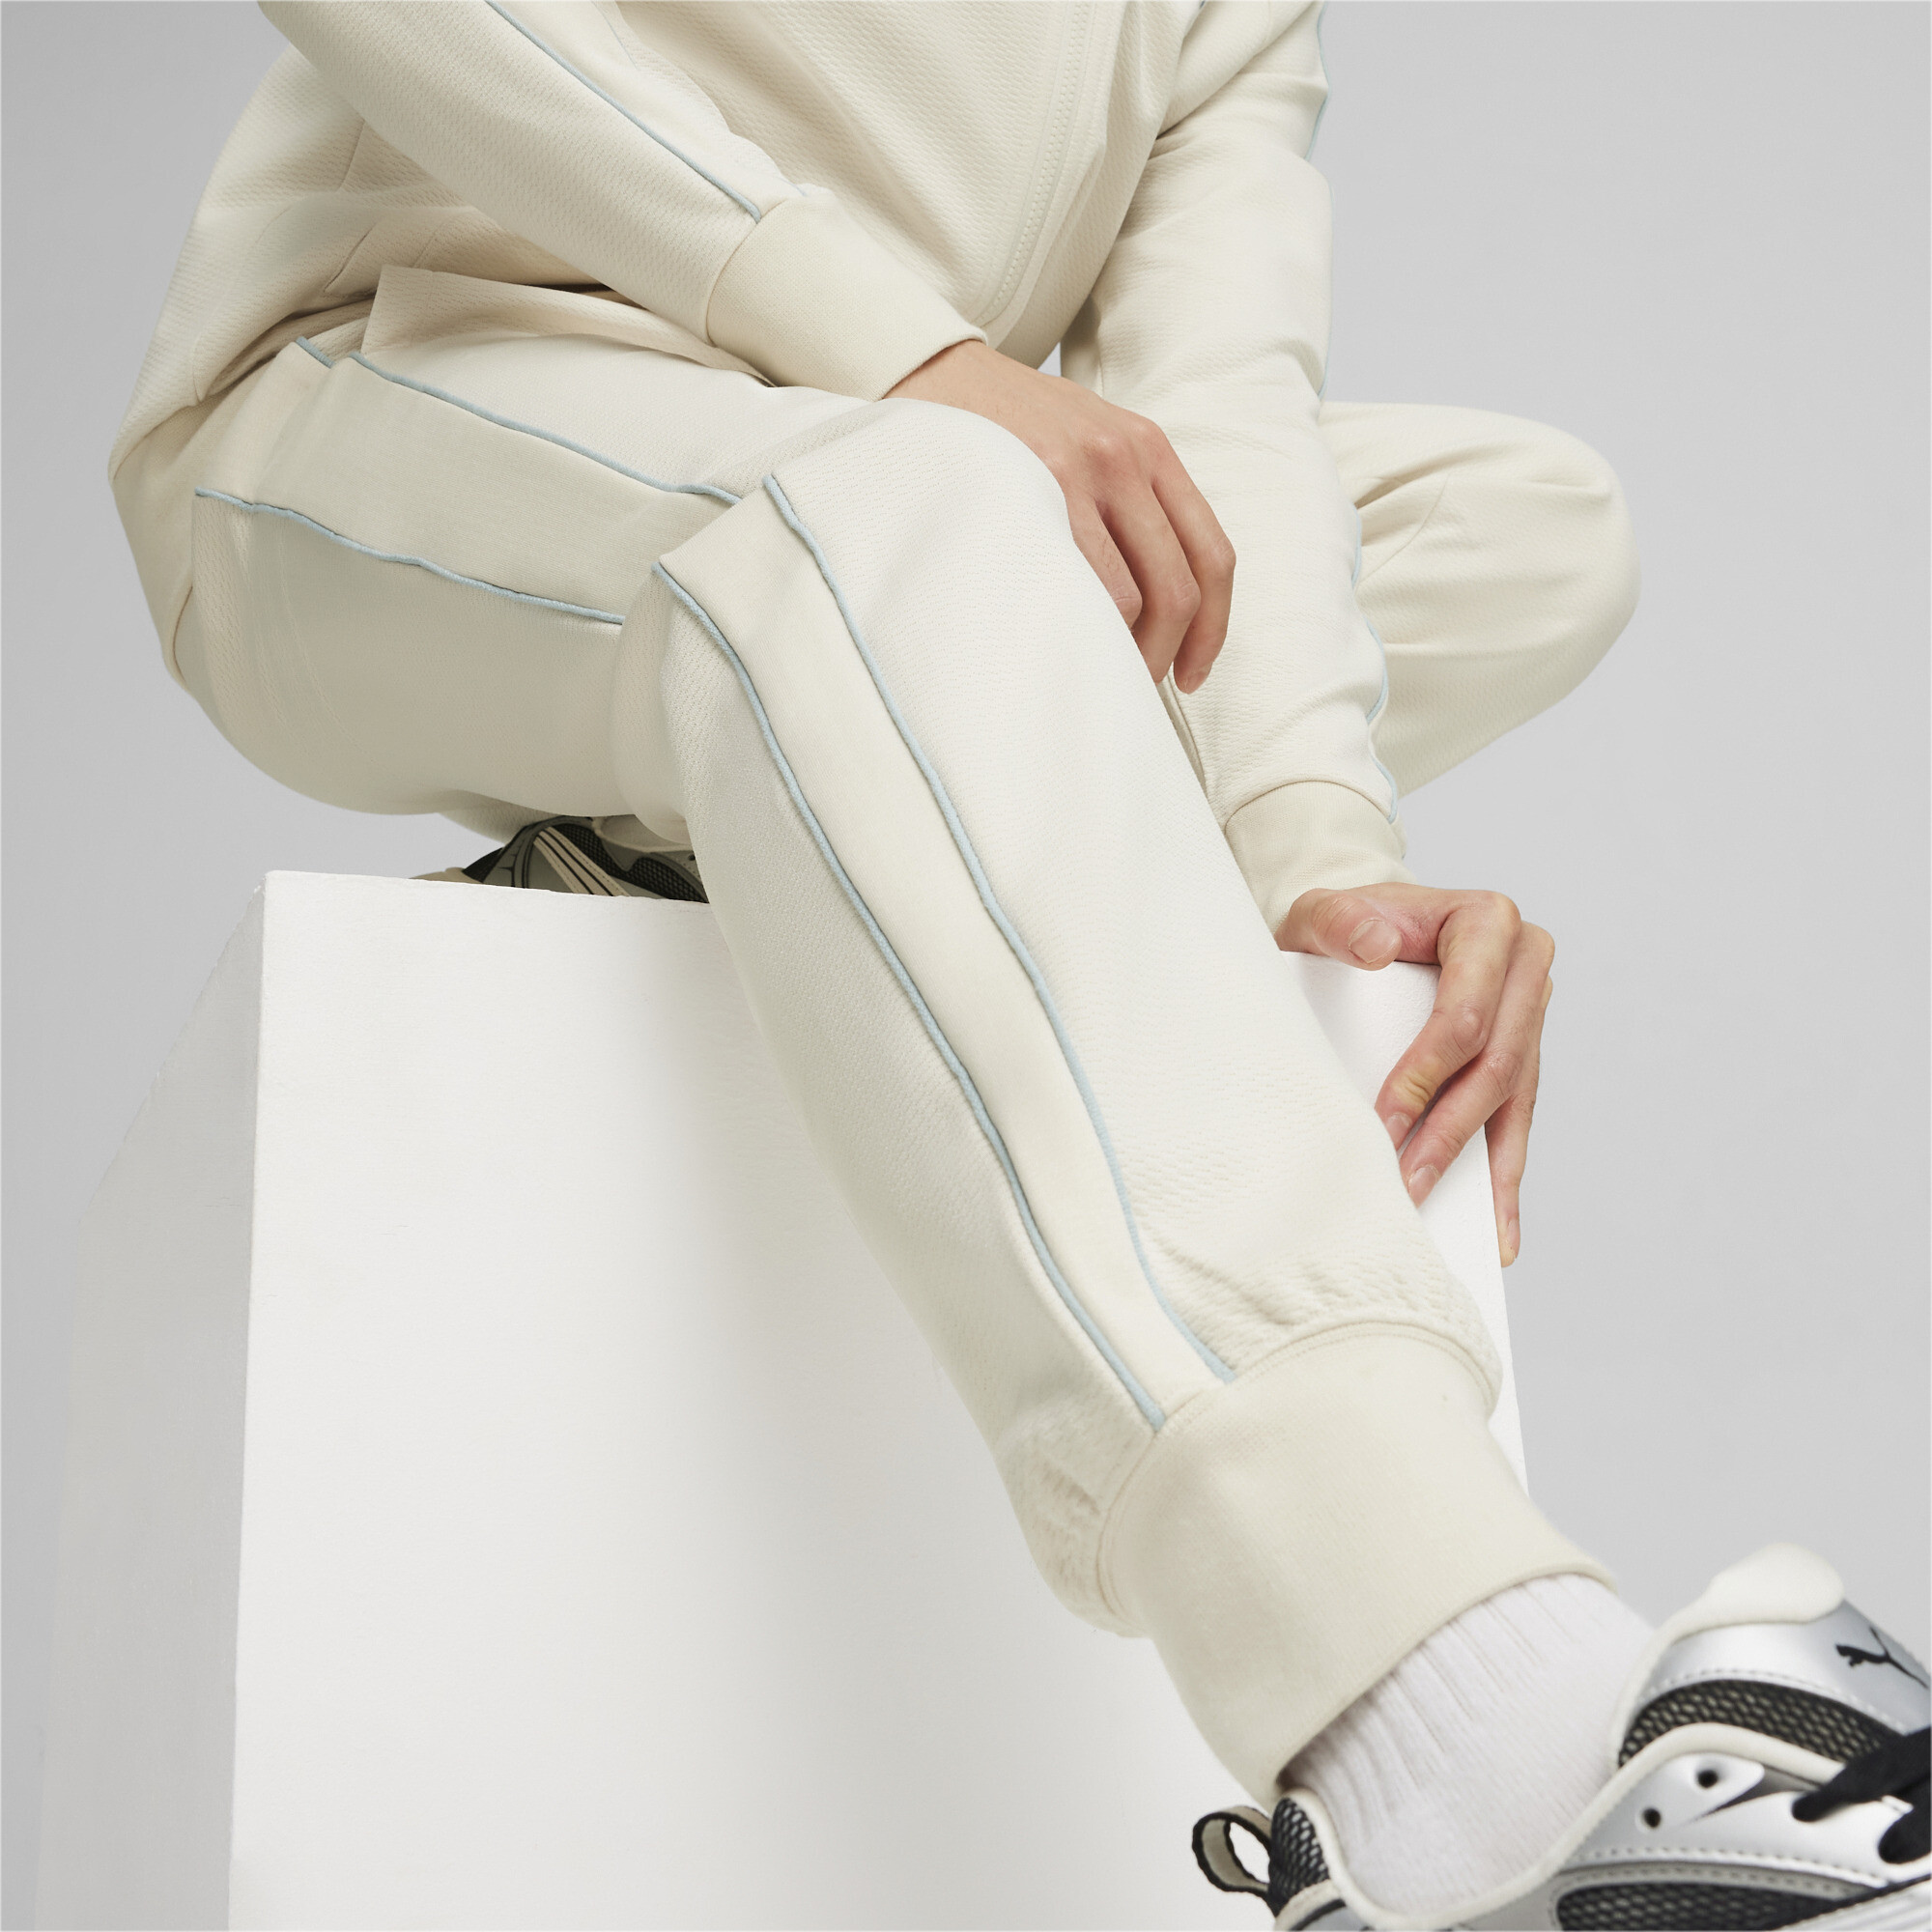 Men's Puma T7's Track Pants, White, Size XXL, Clothing